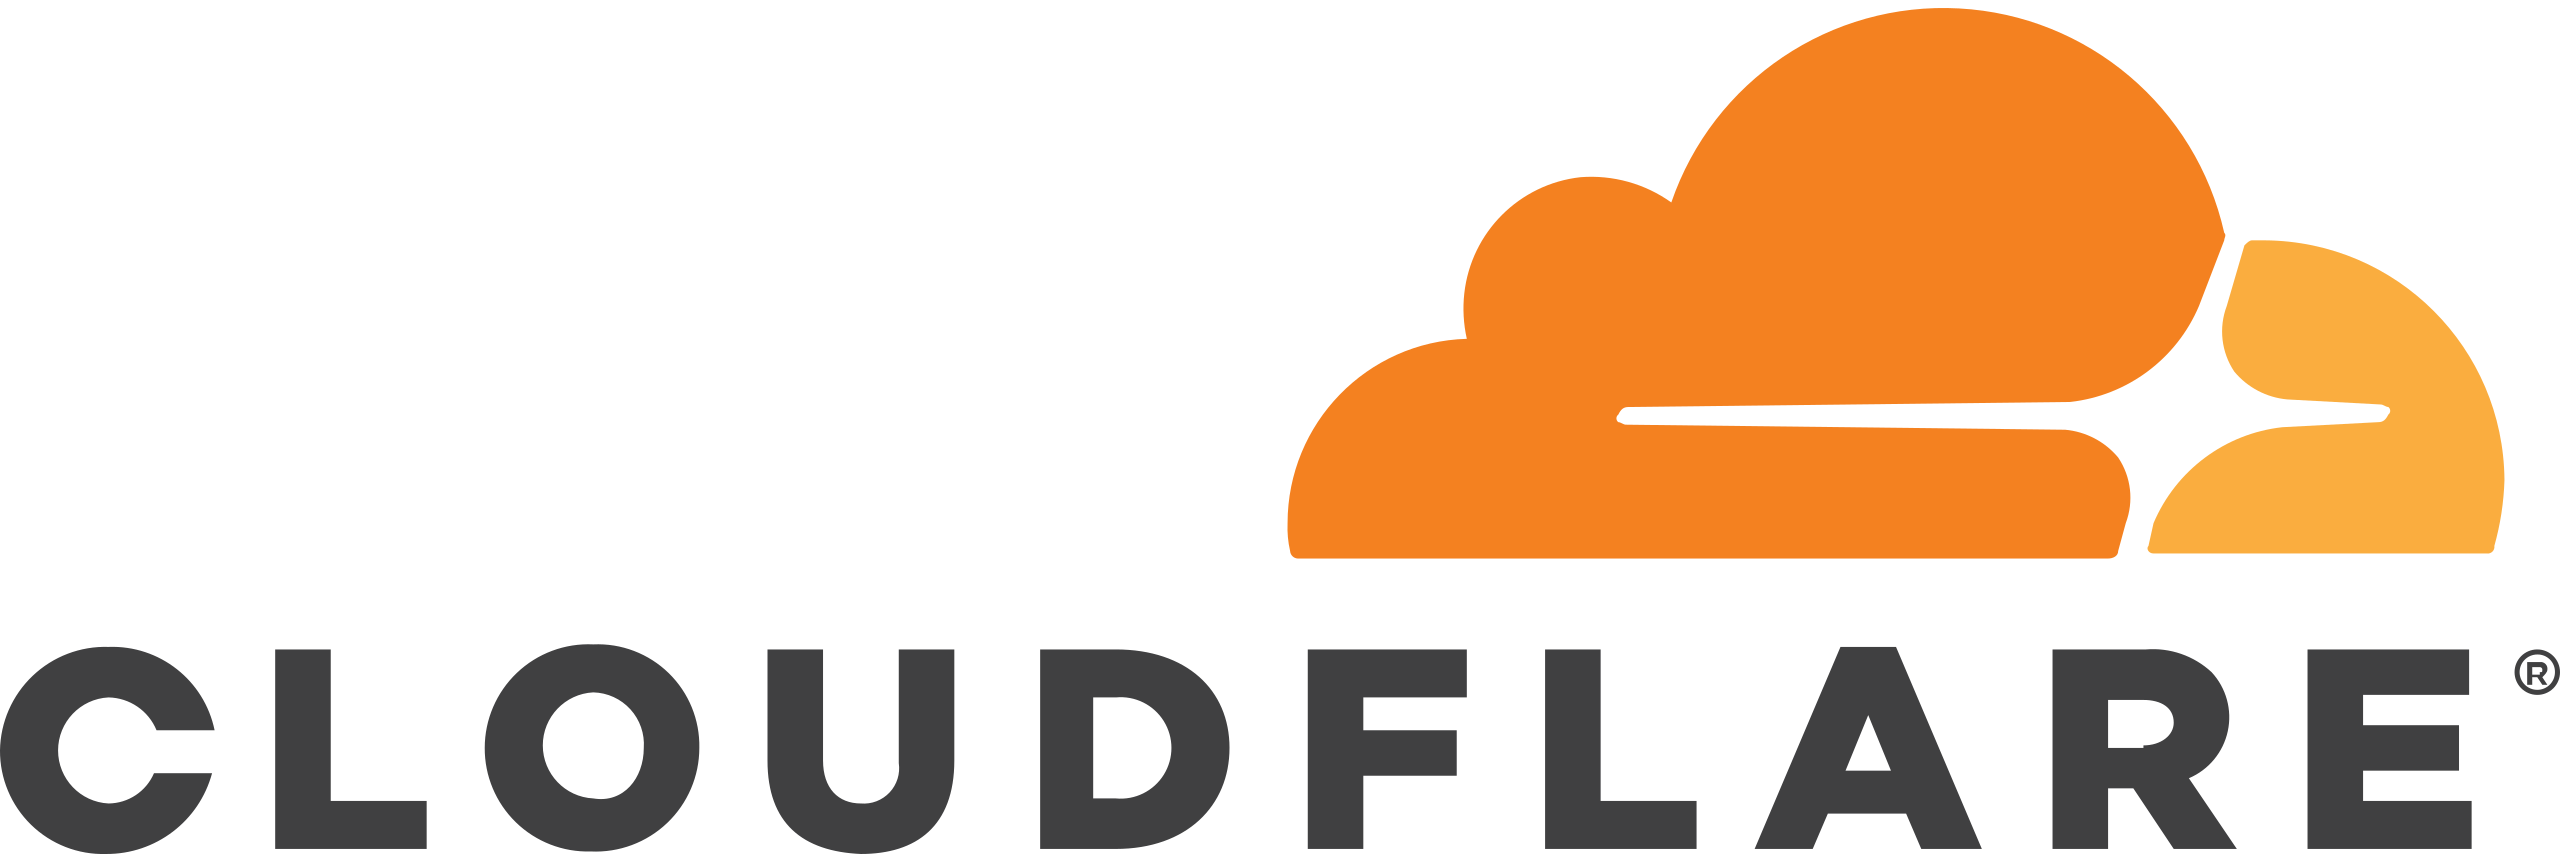 File:Cloudflare Logo.svg - Wikipedia